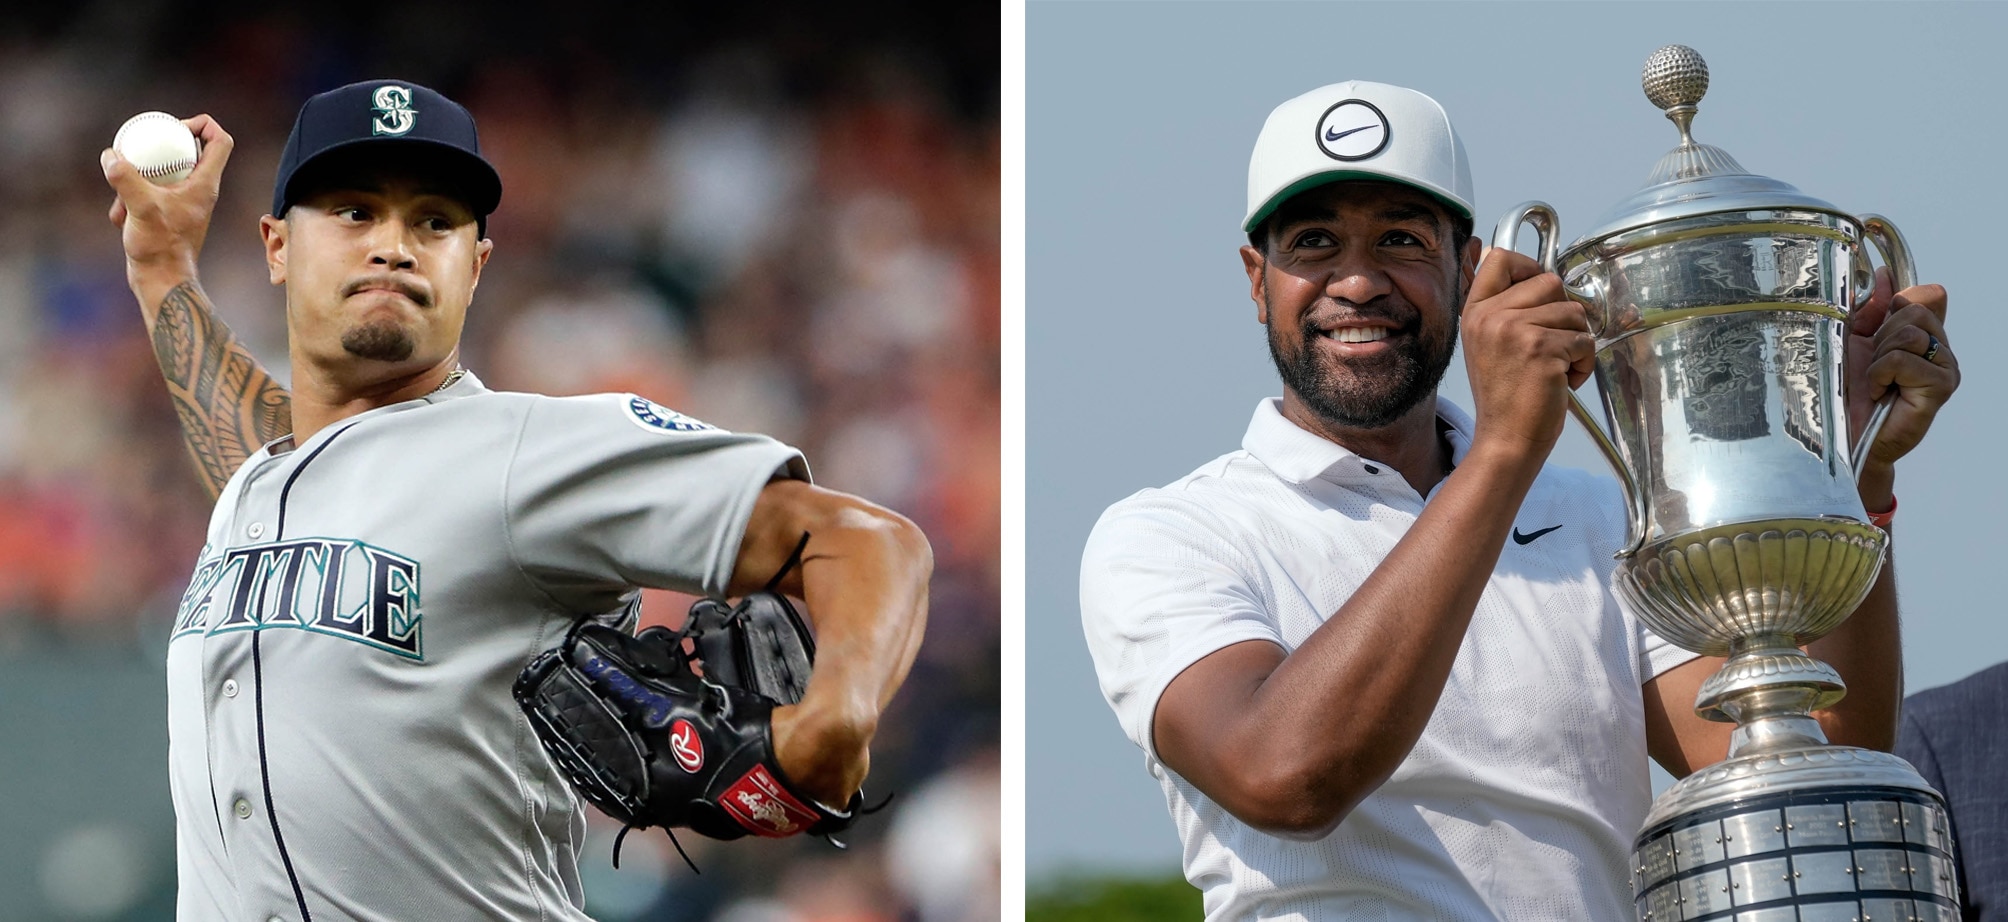 Foto à esquerda: Sam Tuivailala jogando beisebol (© Moises Castillo/AP). Foto à direita: Tony Finau segurando um troféu (© Moises Castillo/AP)